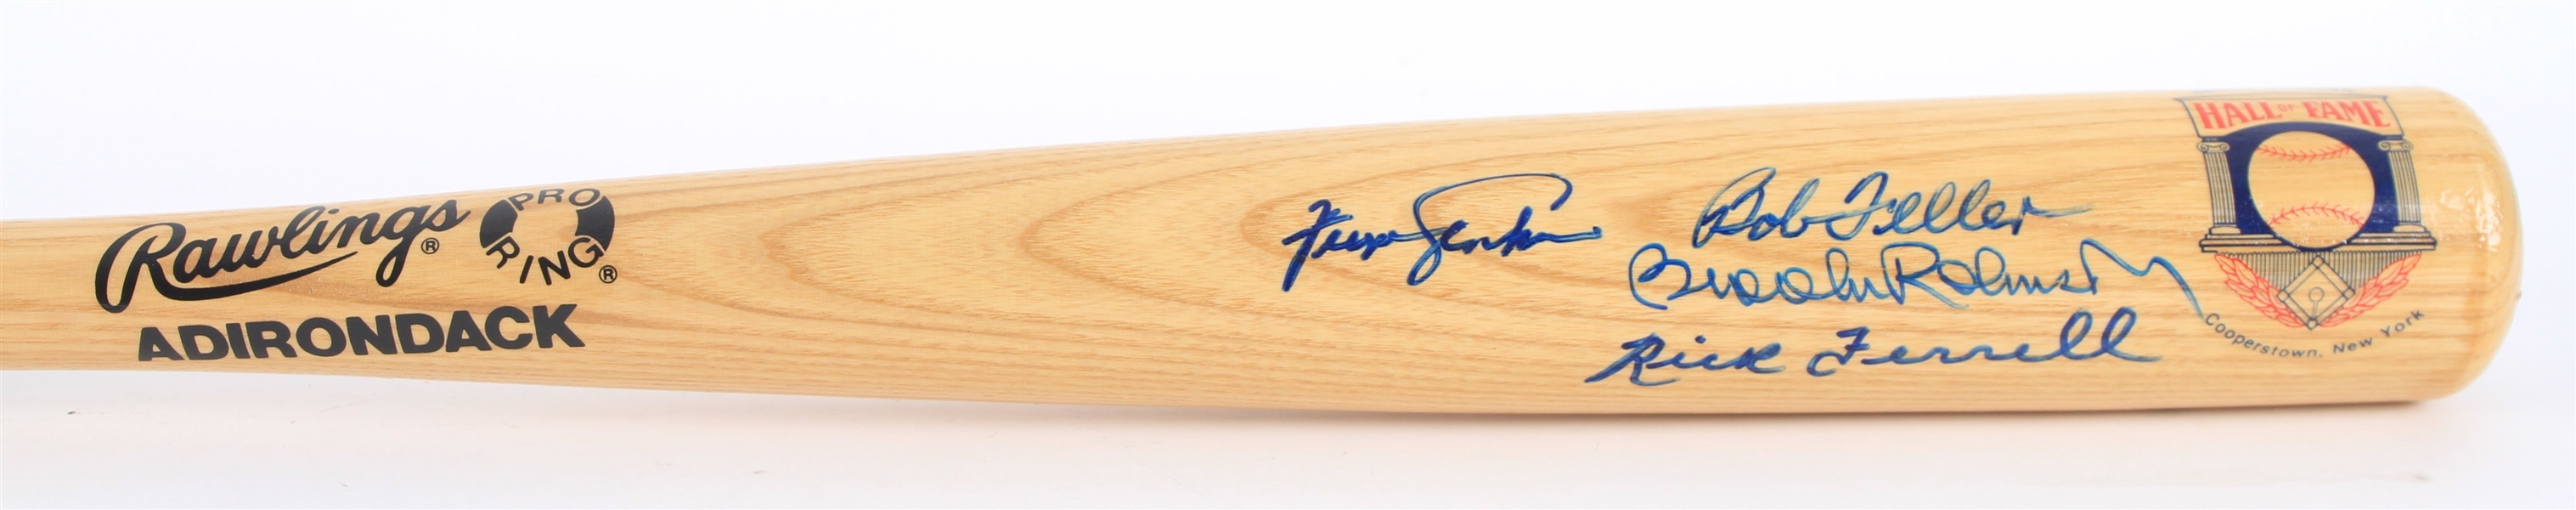 1986-90 Bob Feller Fergie Jenkins Brooks Robinson Rick Ferrell Signed Rawlings Adirondack Hall of Fame Bat (JSA)